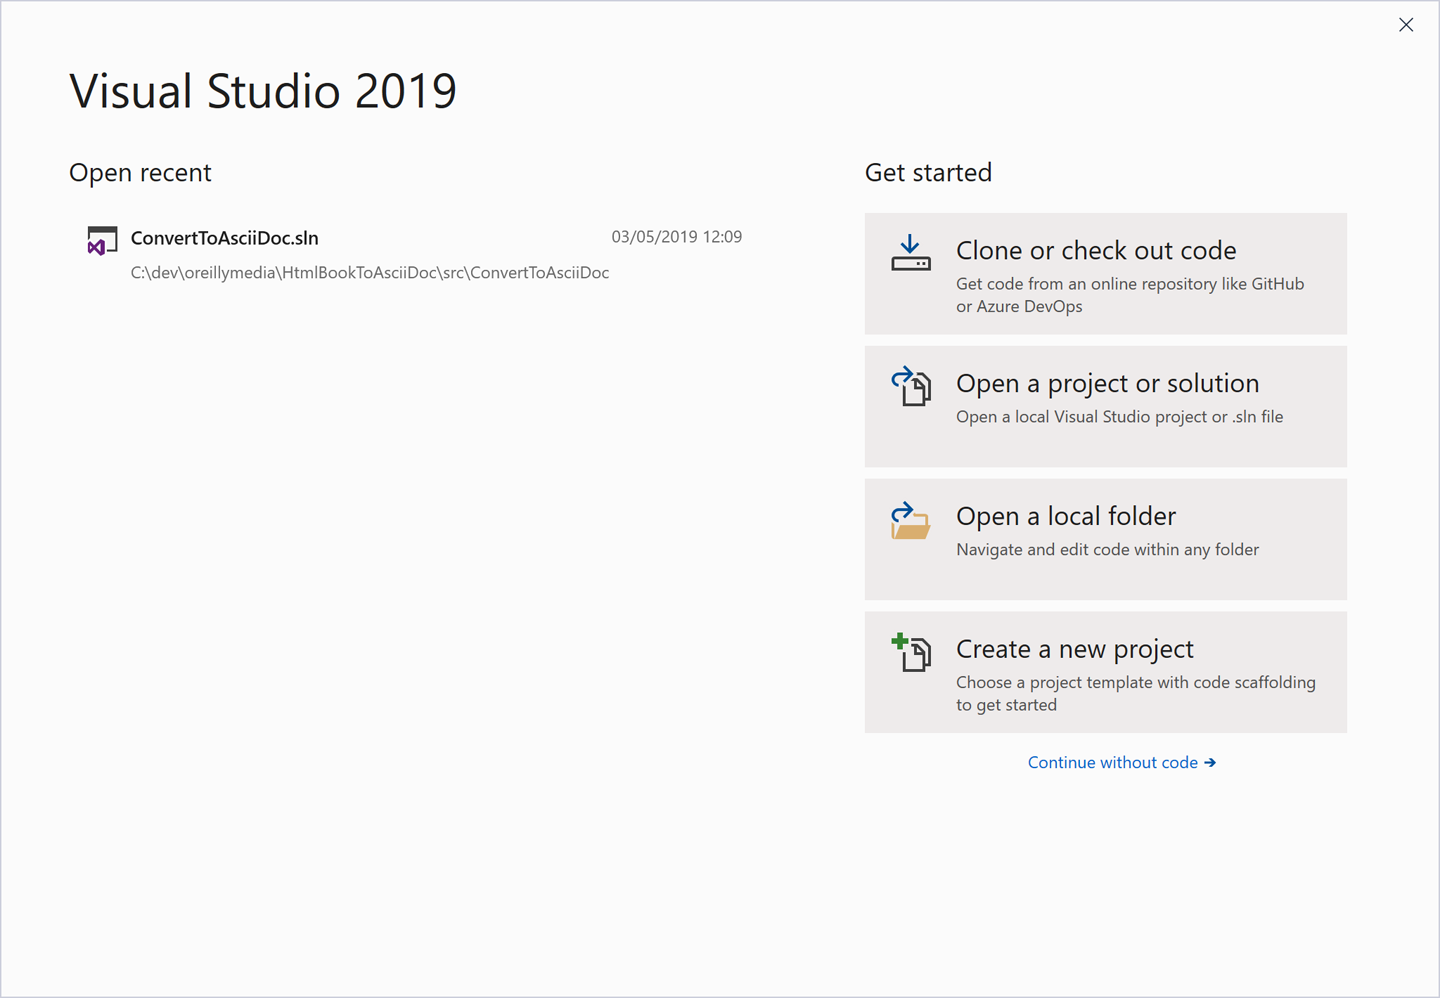 Visual Studio's Get started window